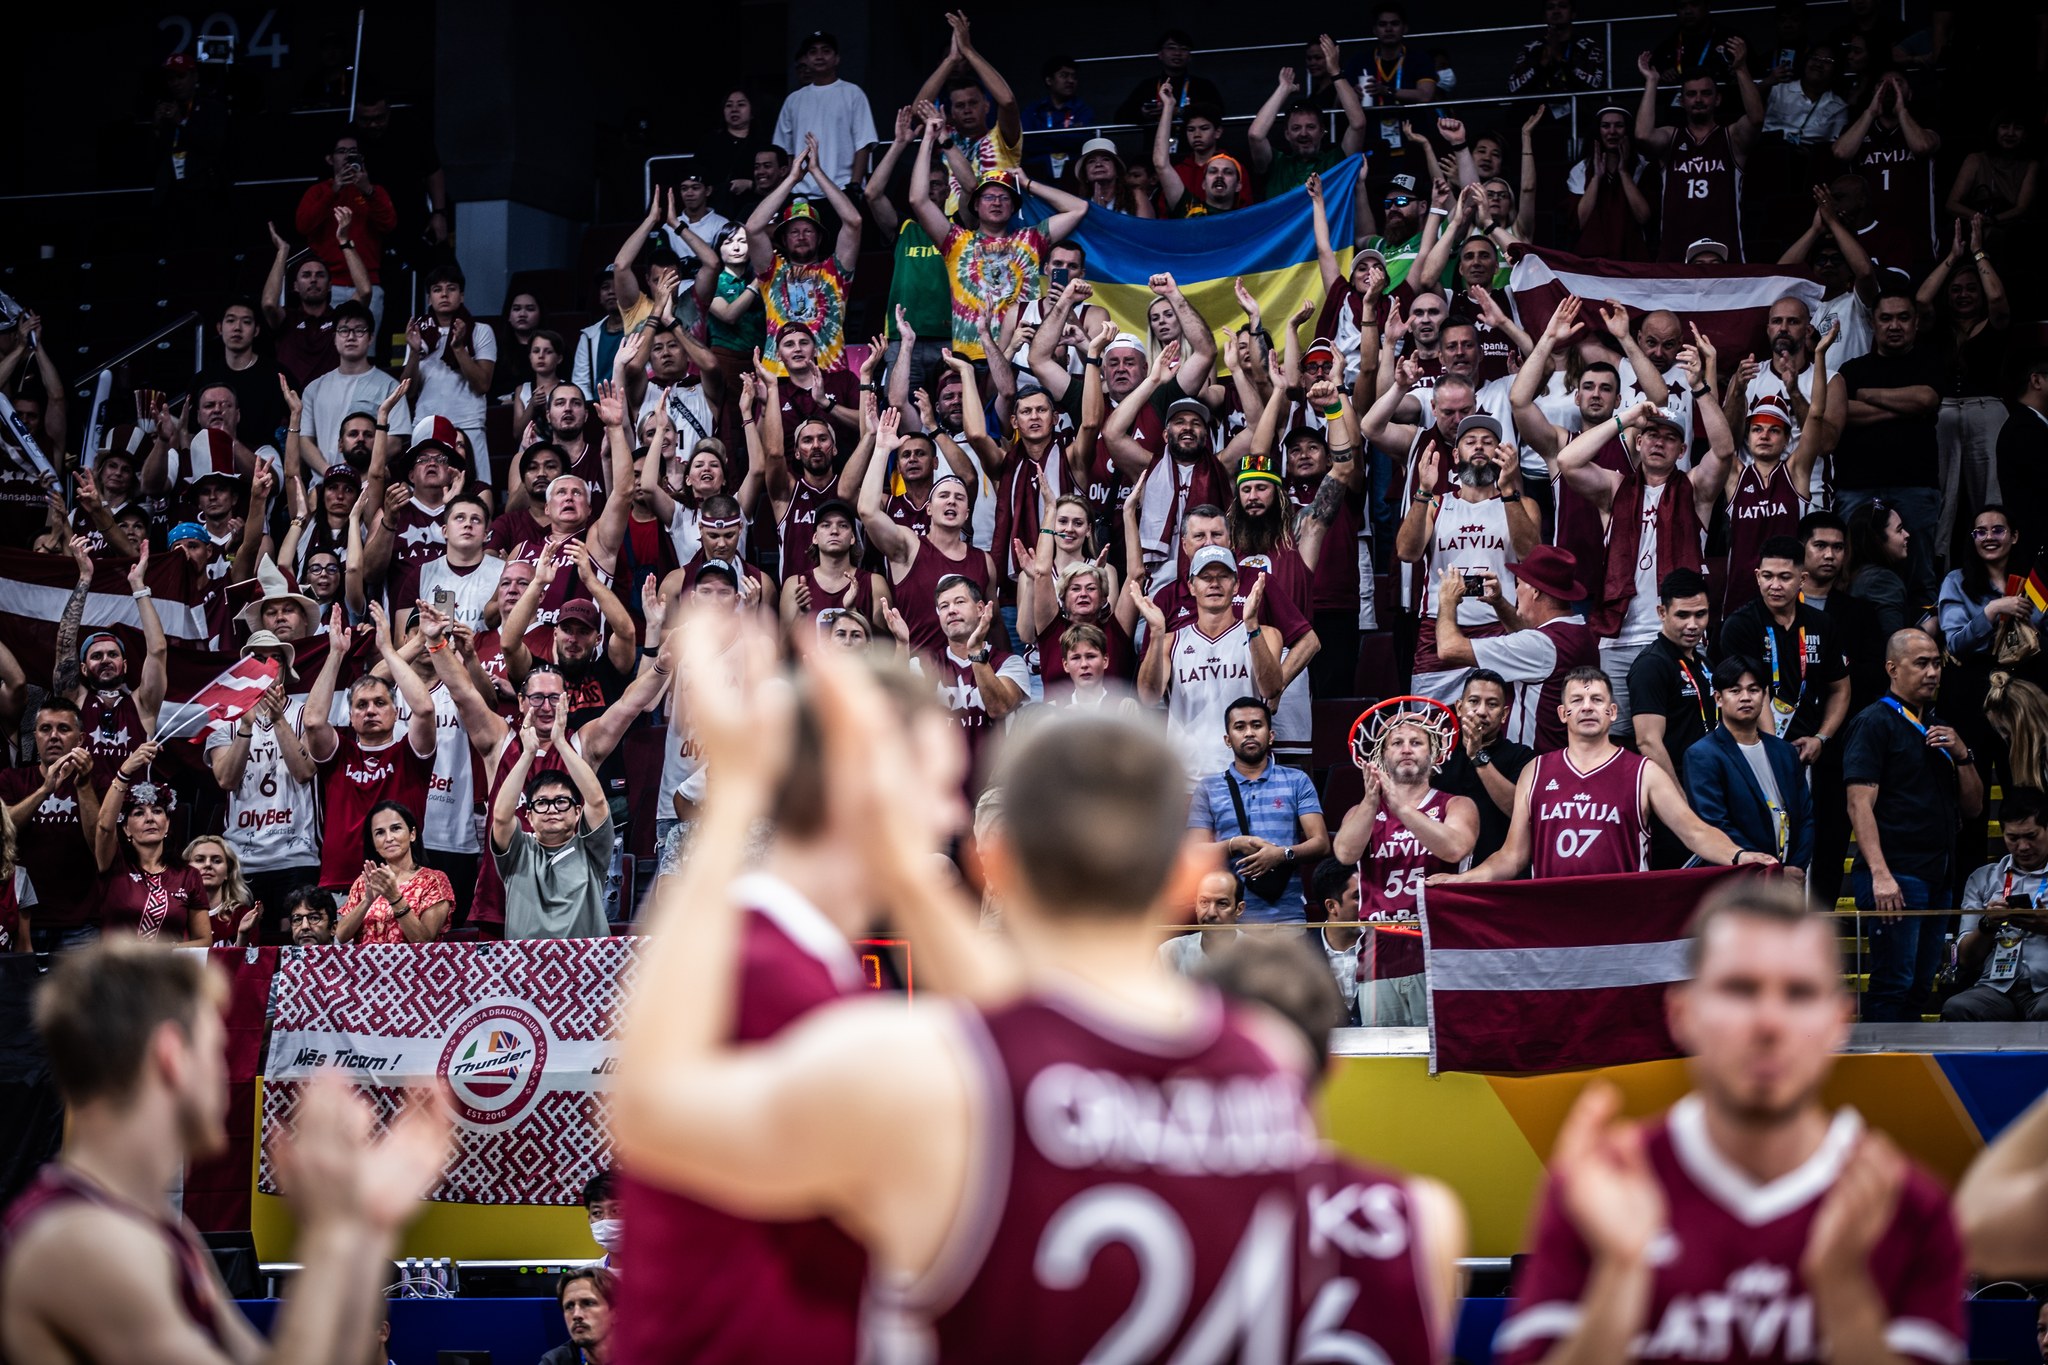 Latvia fans at the 2023 FIBA World Cup